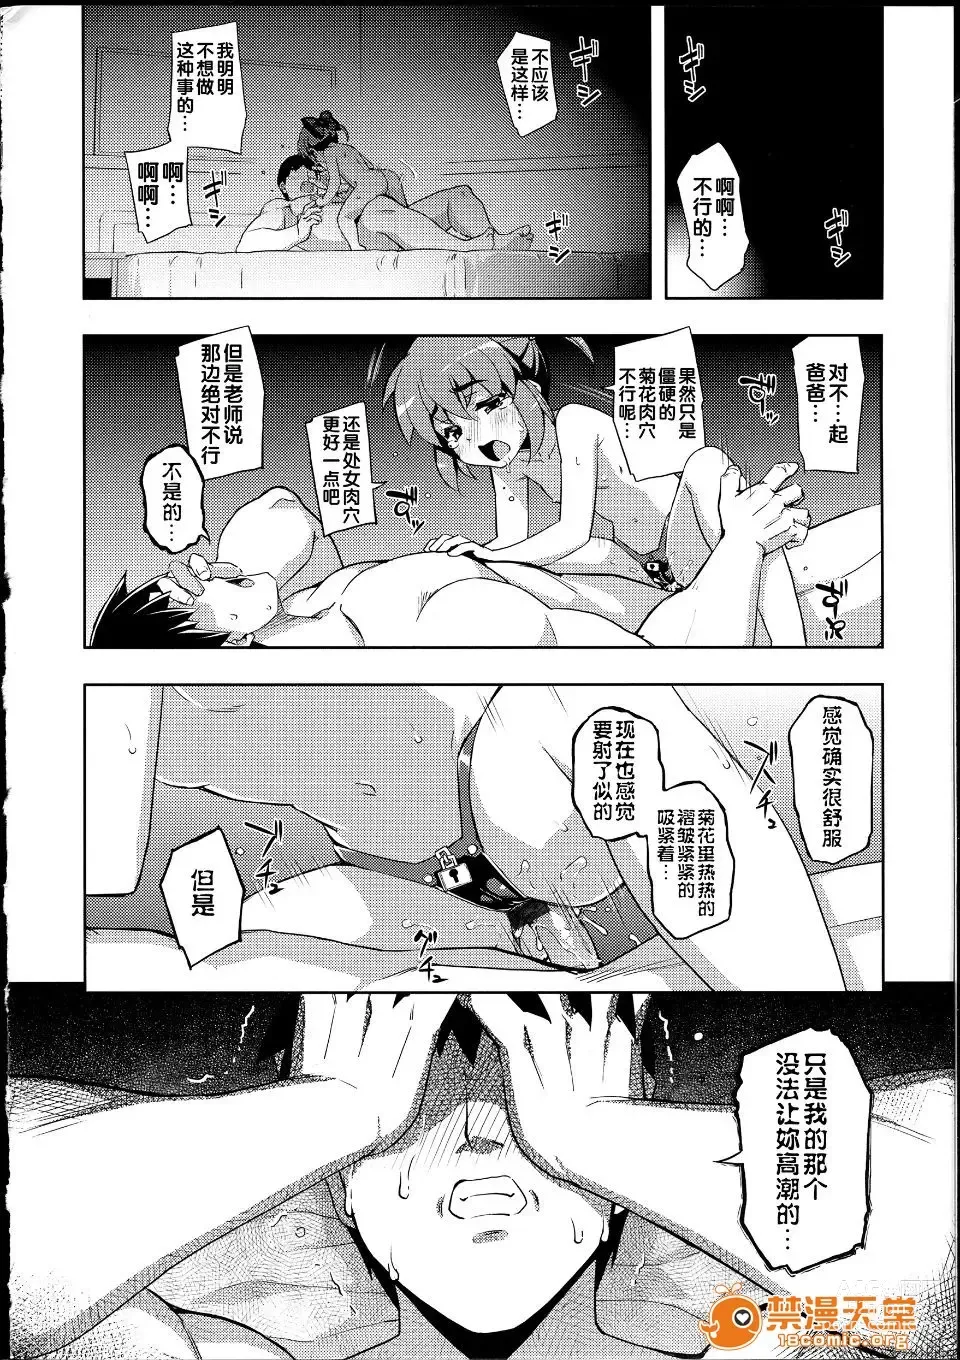 Page 225 of manga NTR²